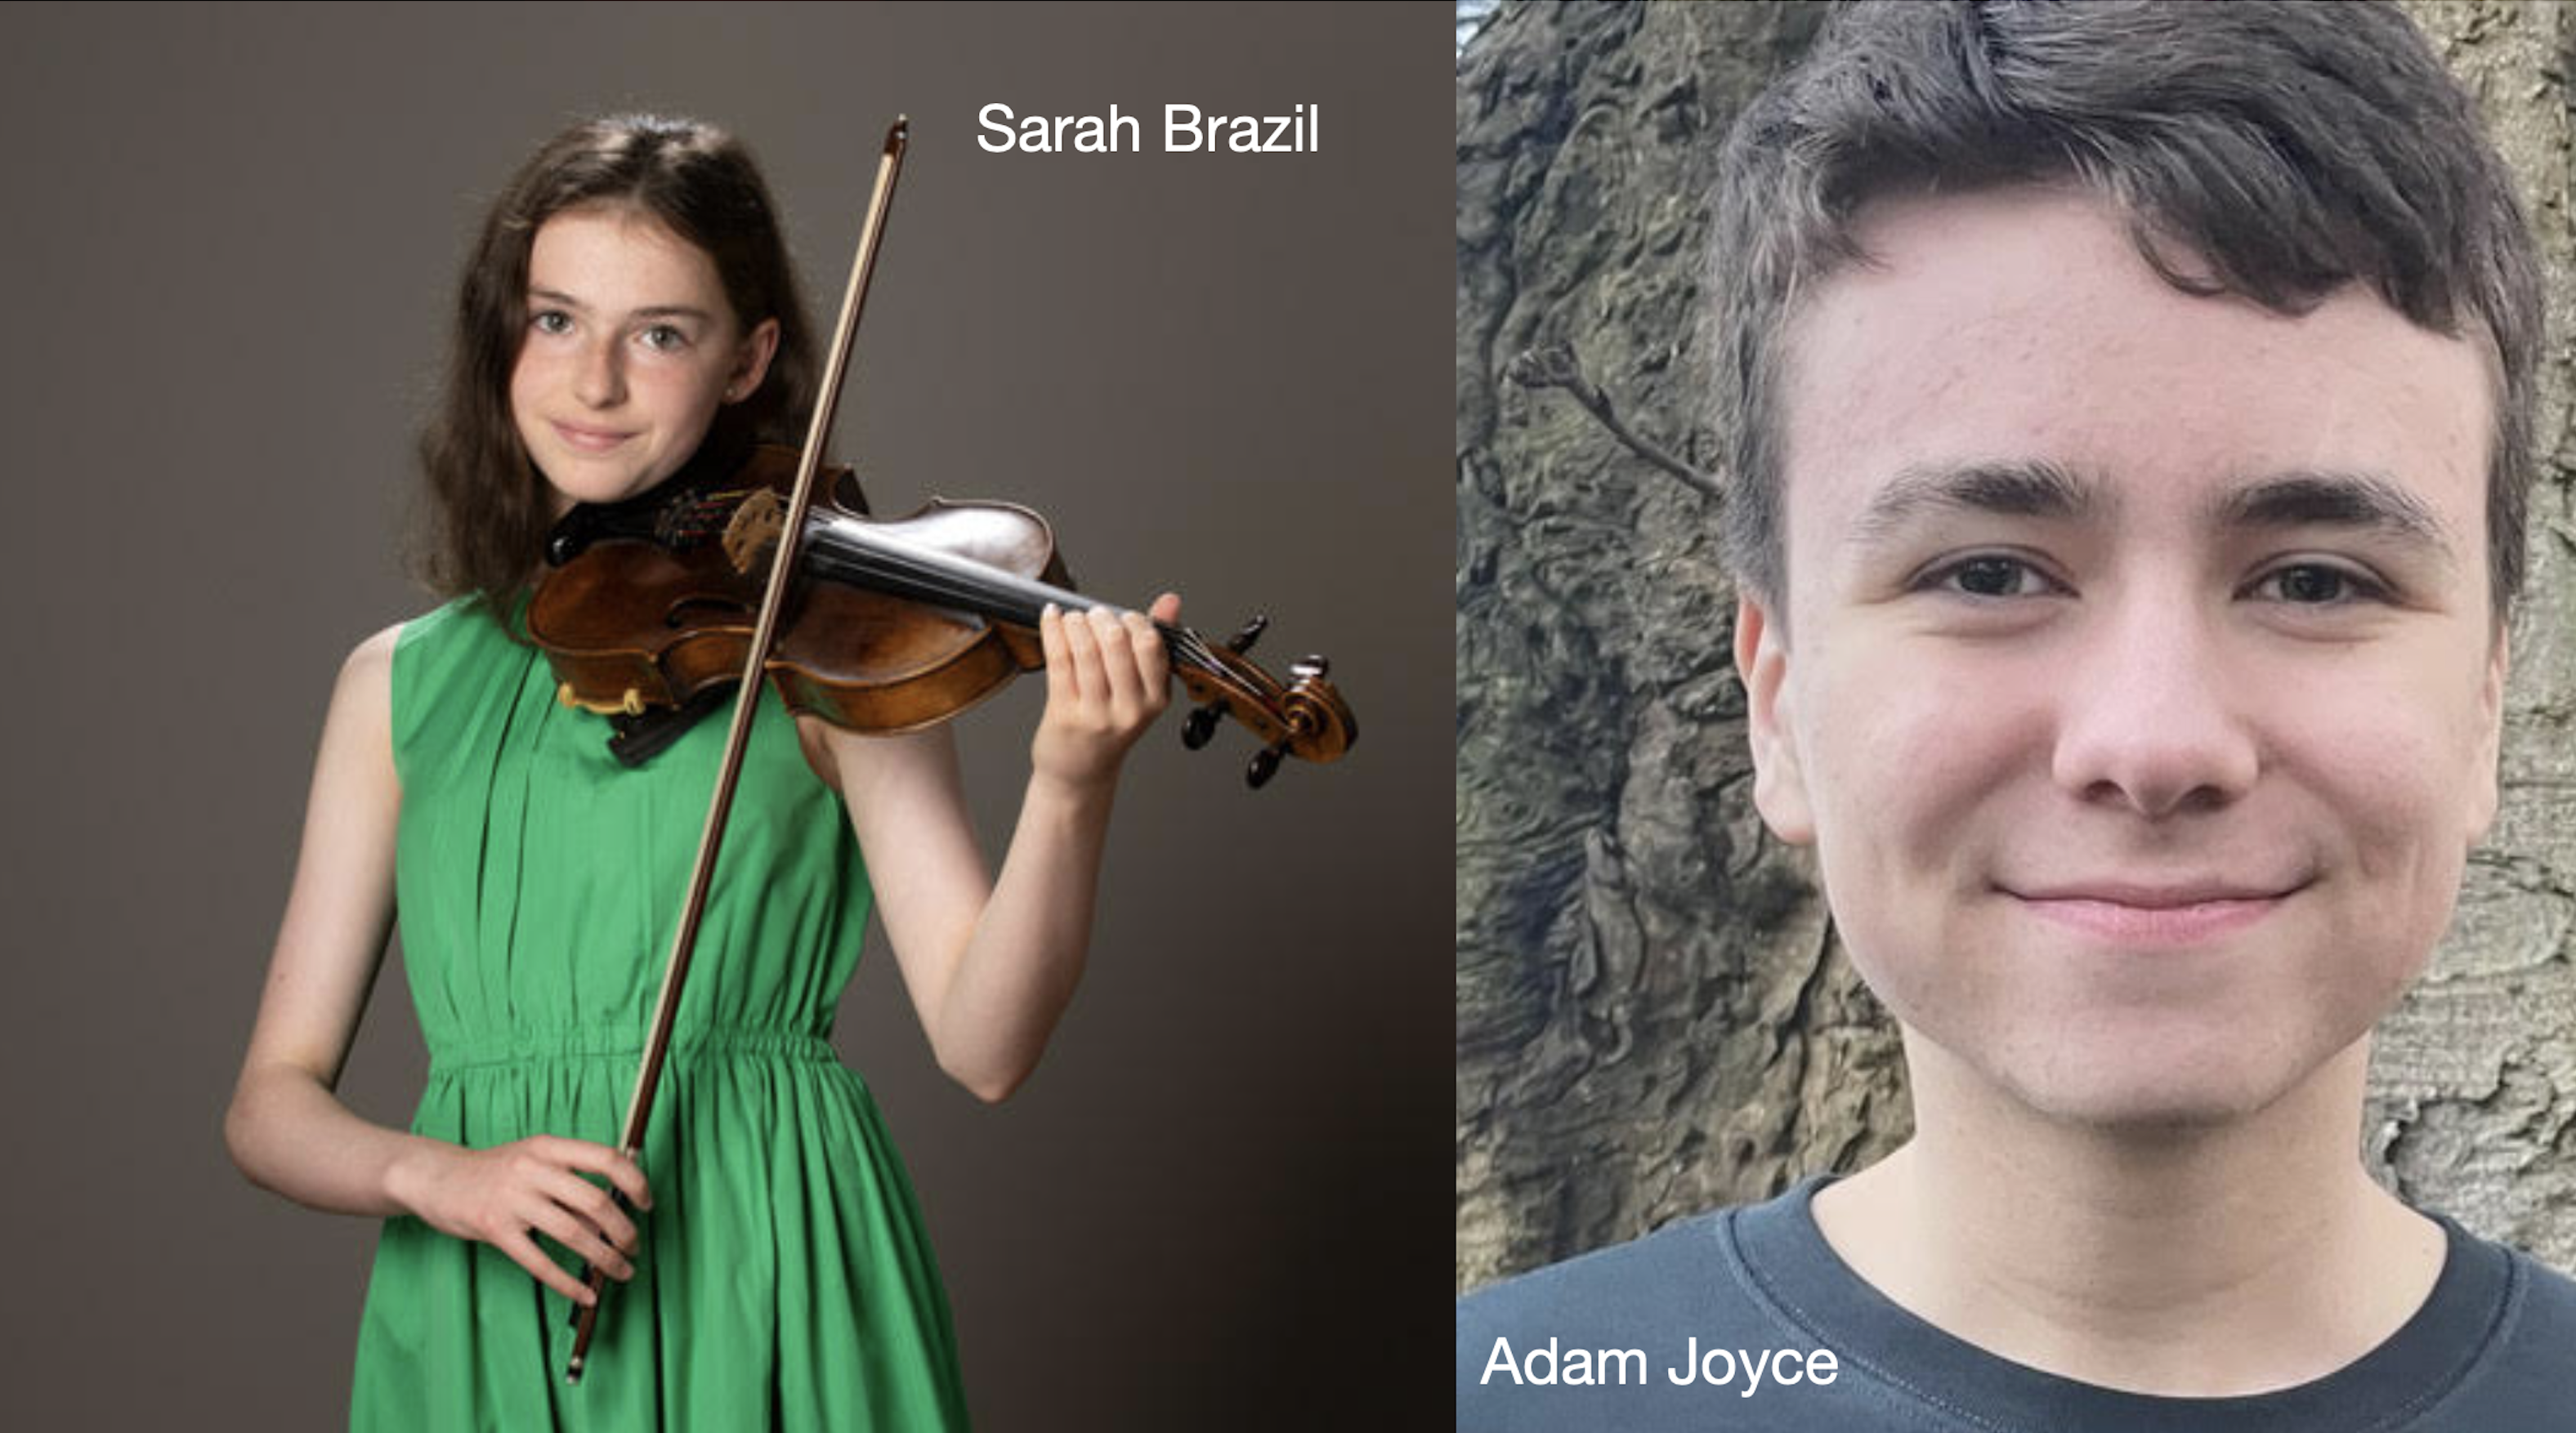 Photo of Sarah Brazil playing violin and photo of Adam Joyce